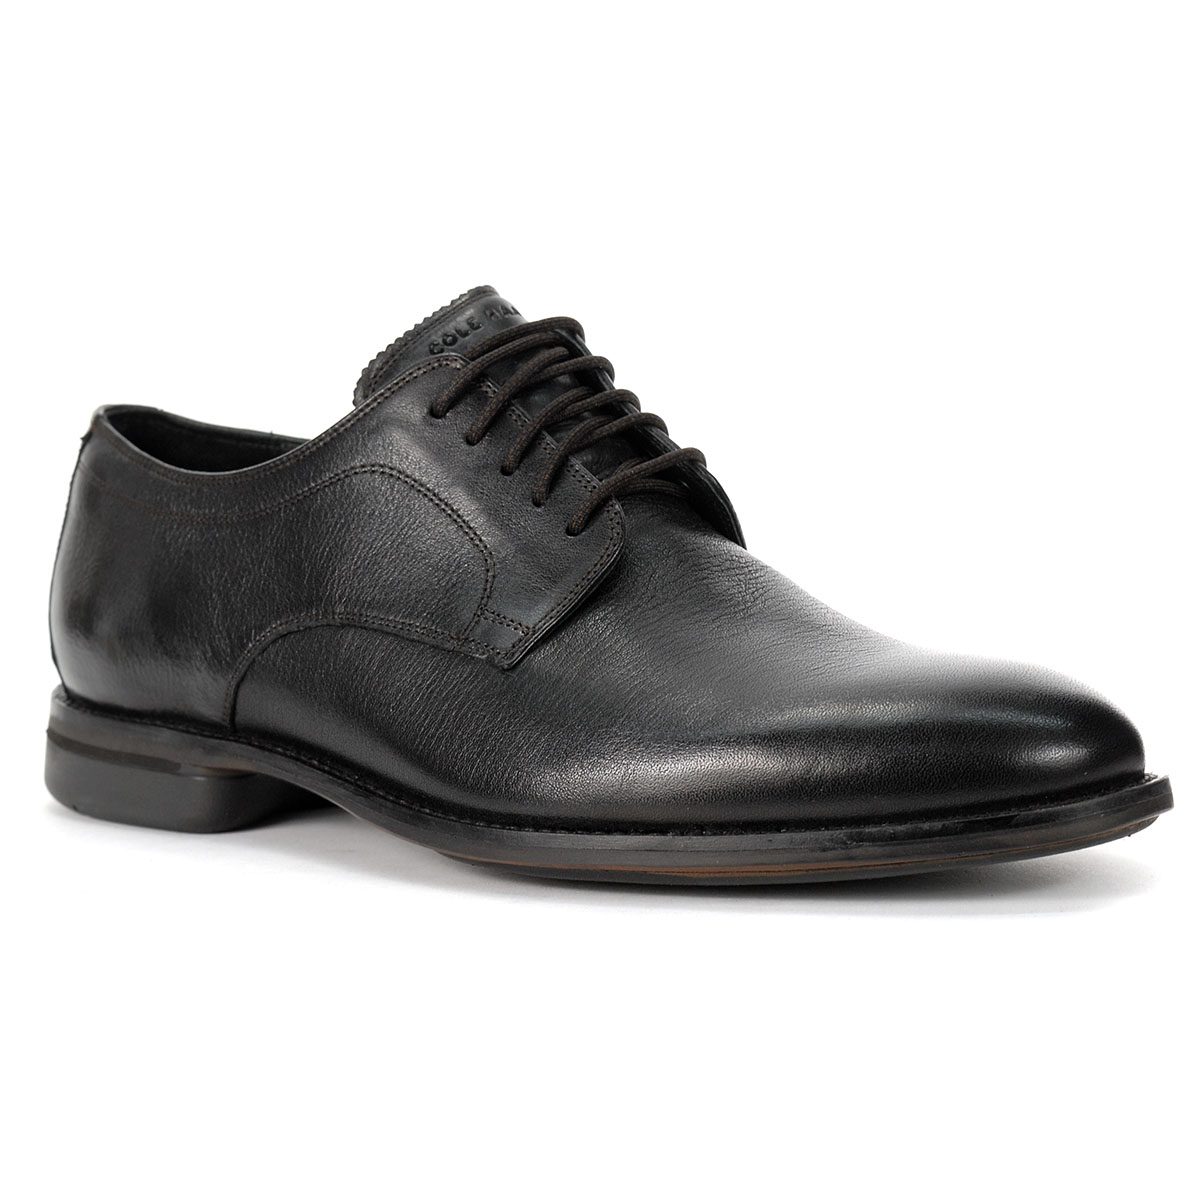 Cole Haan Men's Holland Grand Plain Toe Oxford Black Leather Shoes ...